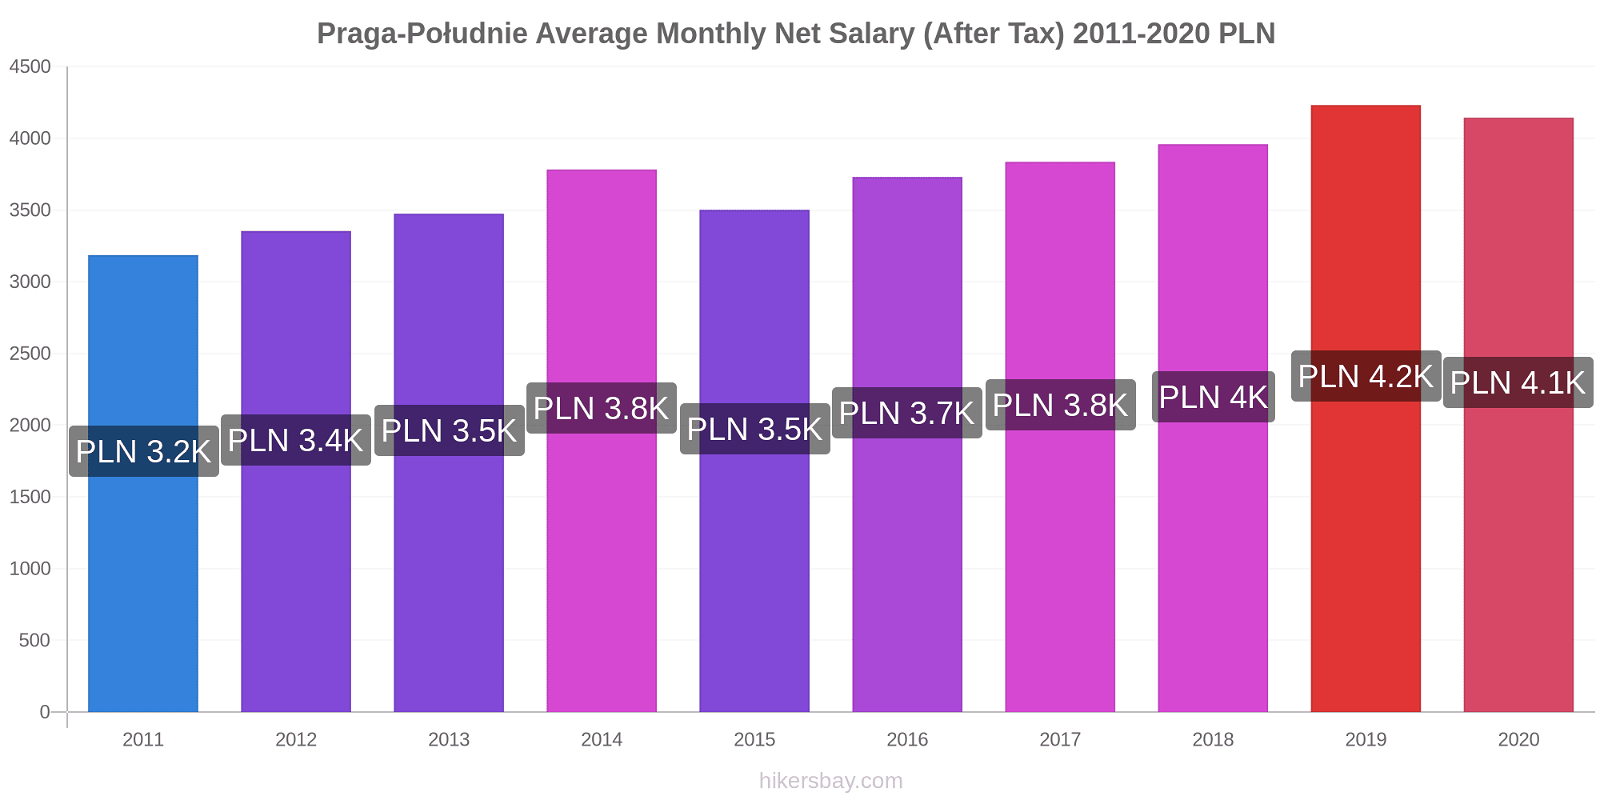 Praga-Południe price changes Average Monthly Net Salary (After Tax) hikersbay.com